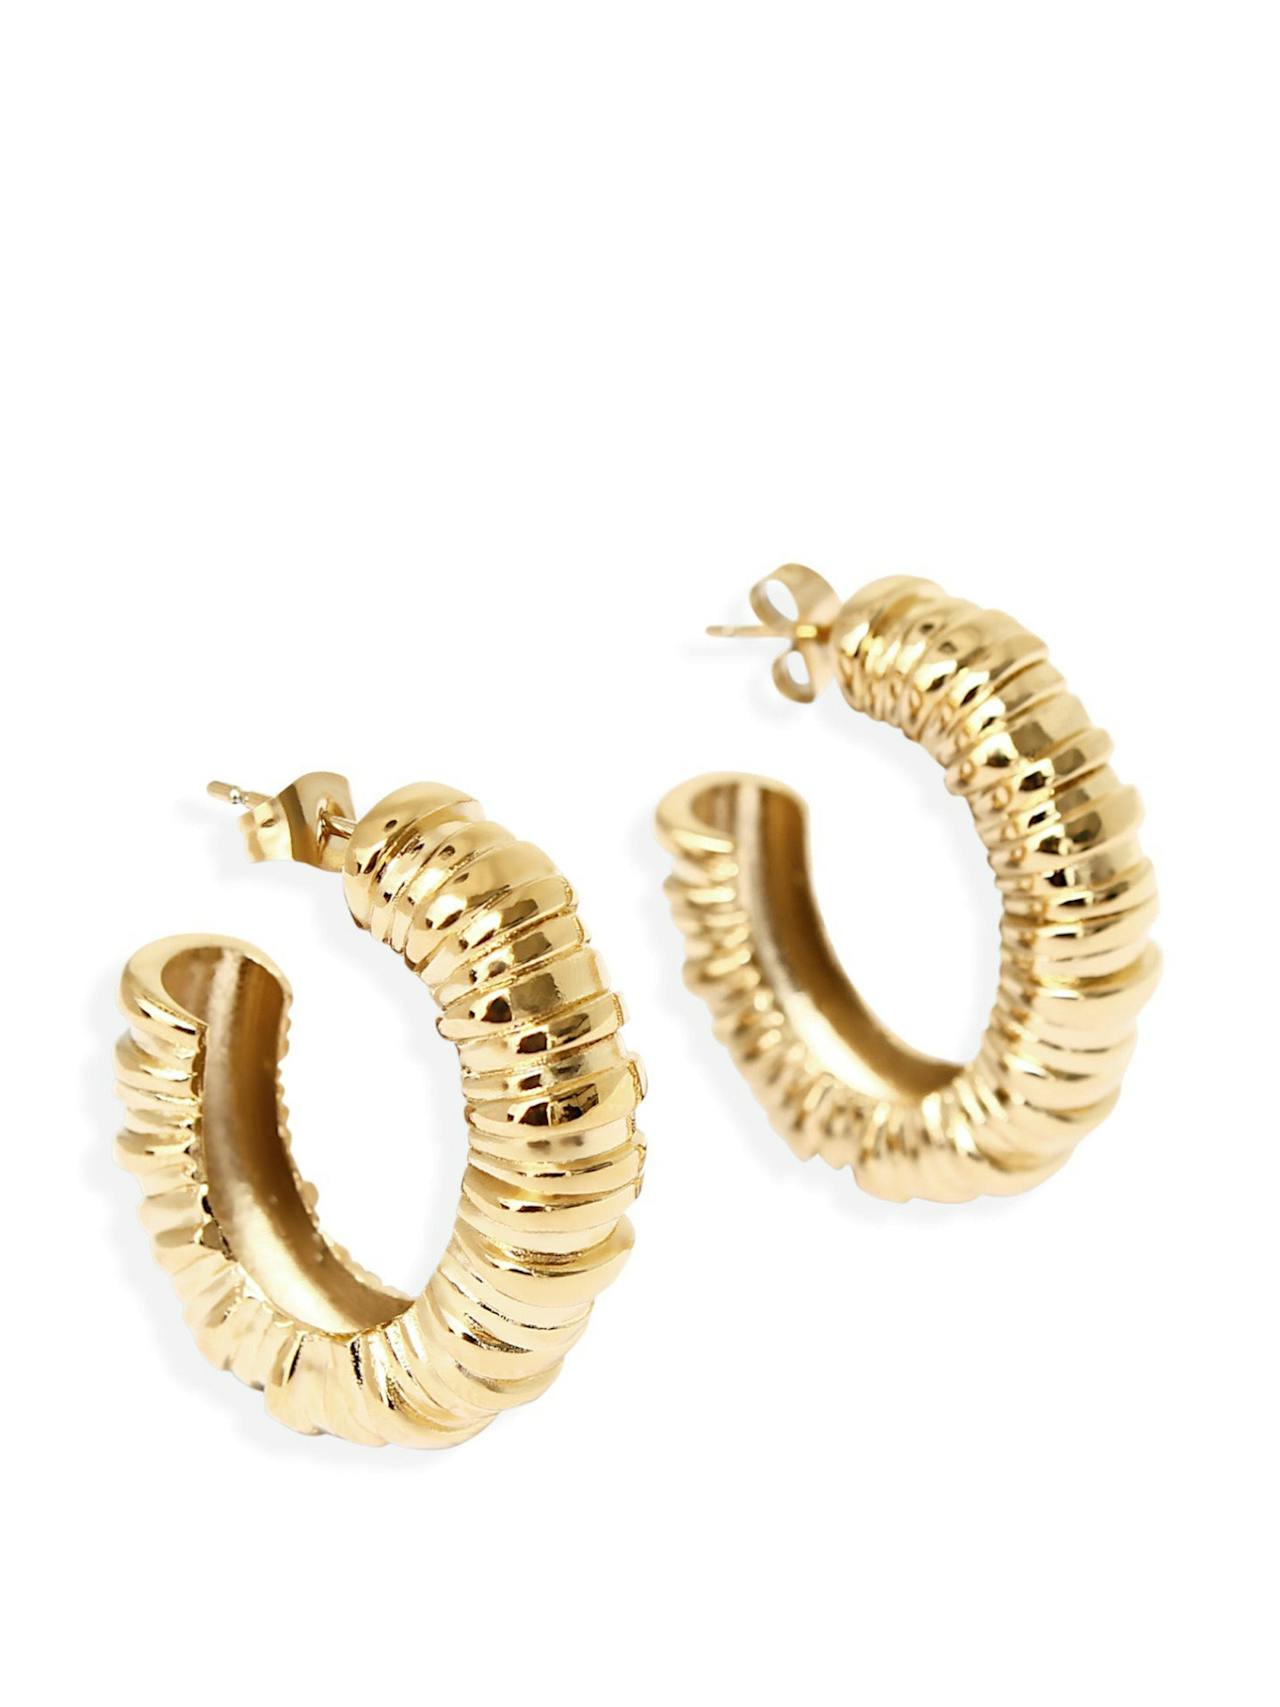 Gold Easton earrings